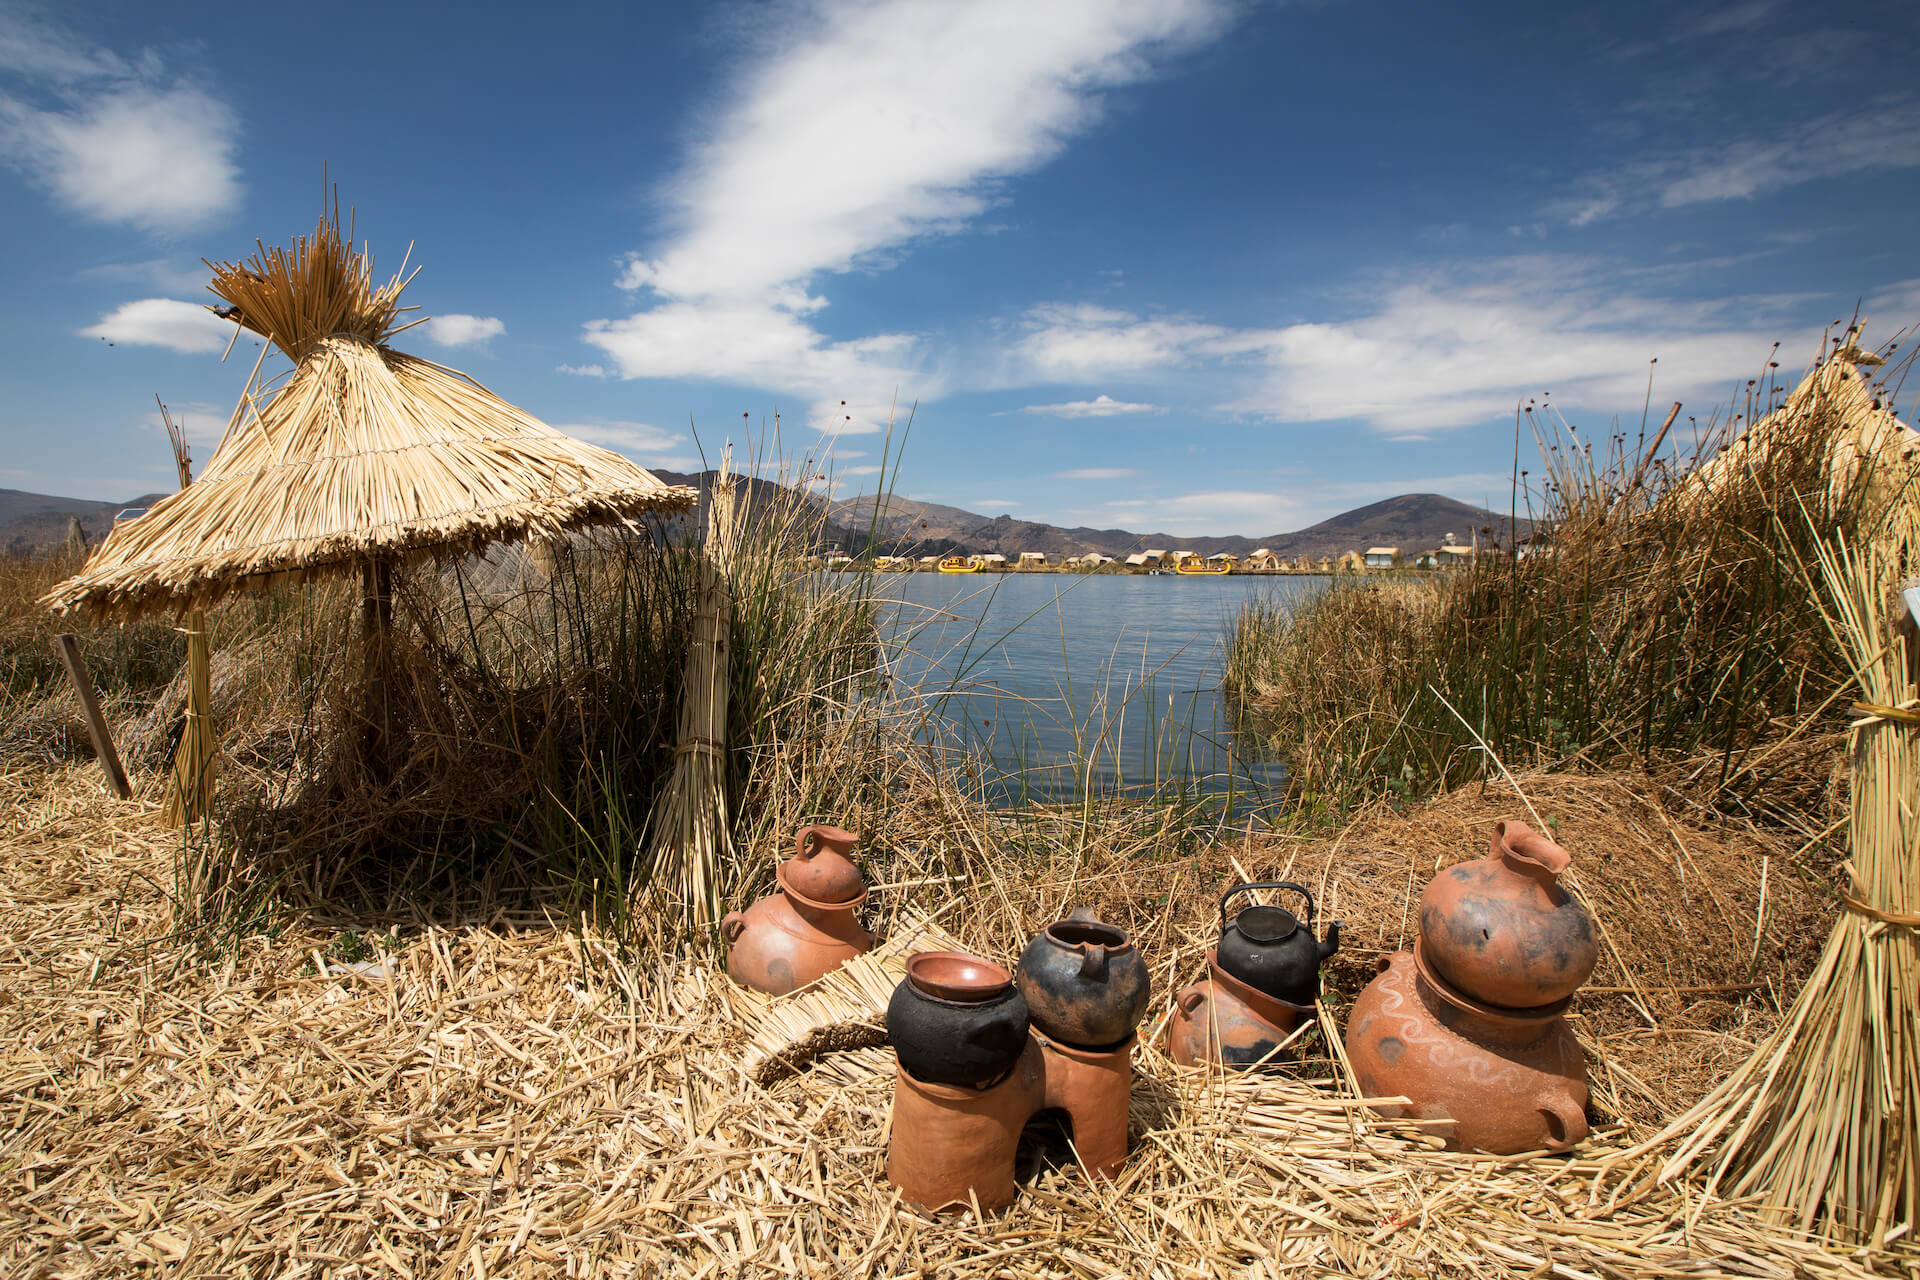 Kuchyně kmene Uros - Jezero Titicaca - Martina Grmolenská | Planeta lidí